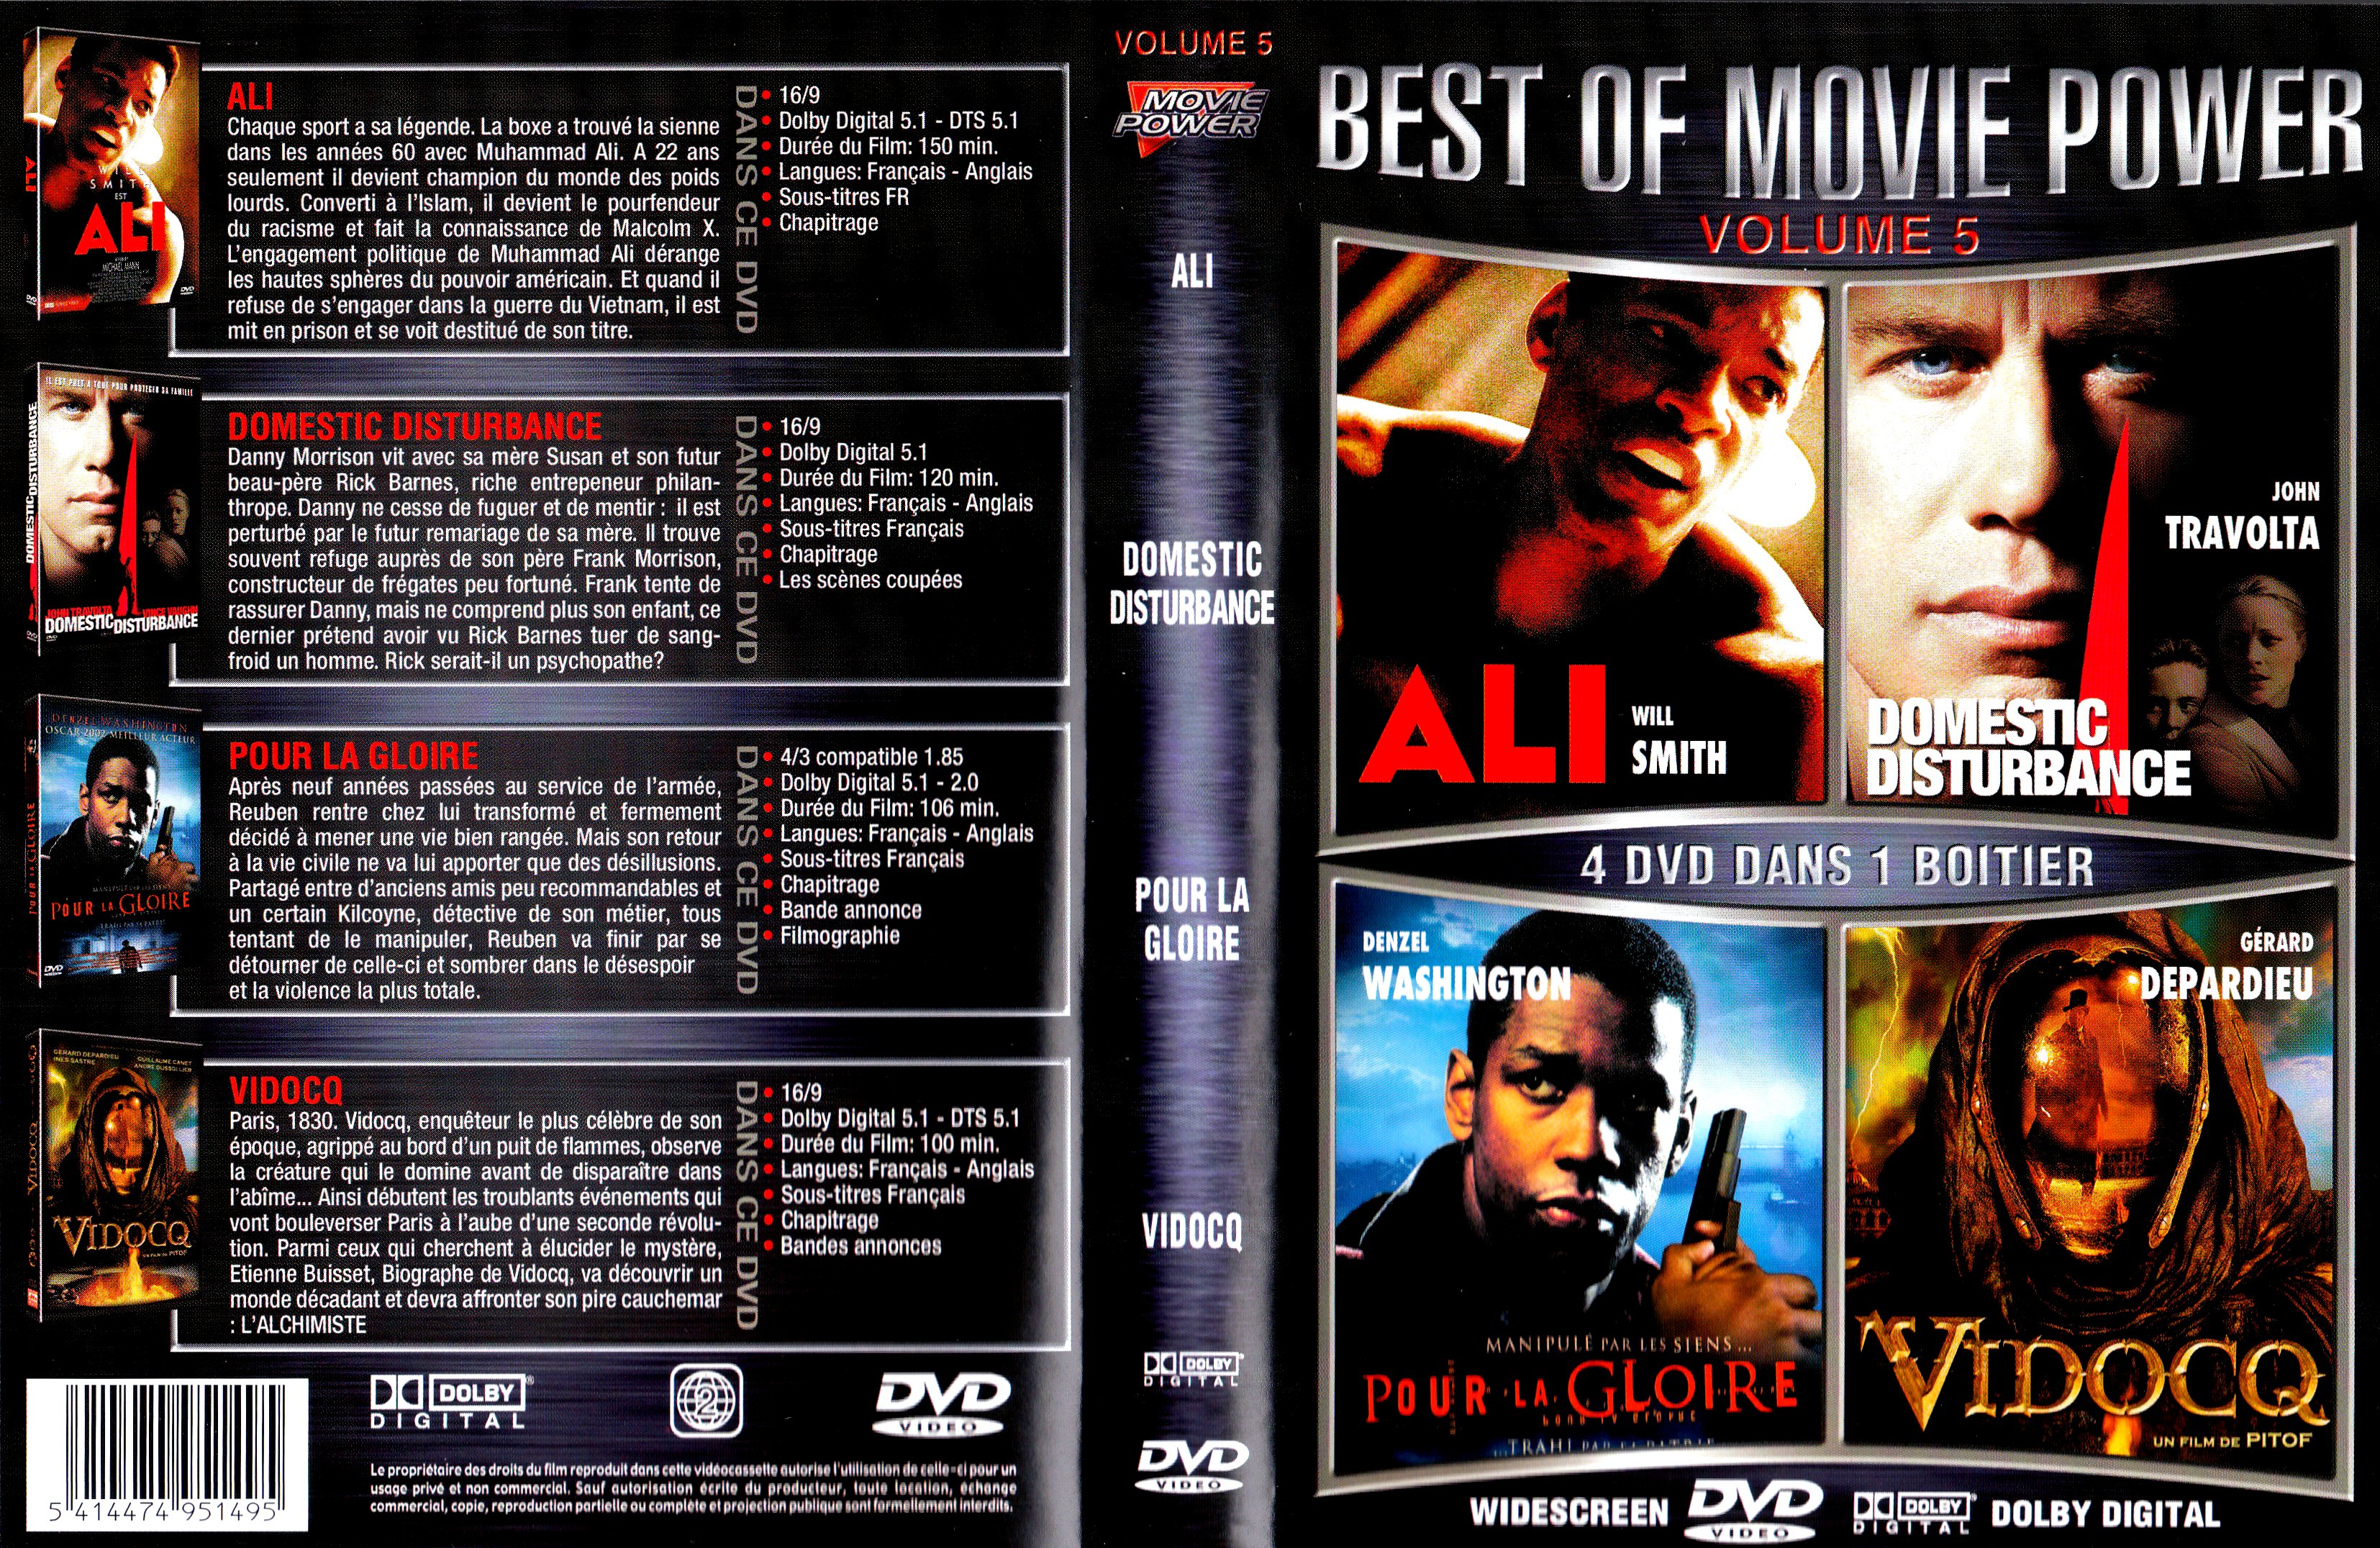 Jaquette DVD Best of Ali + Domestic disturbance + Pour la gloire + Vidocq